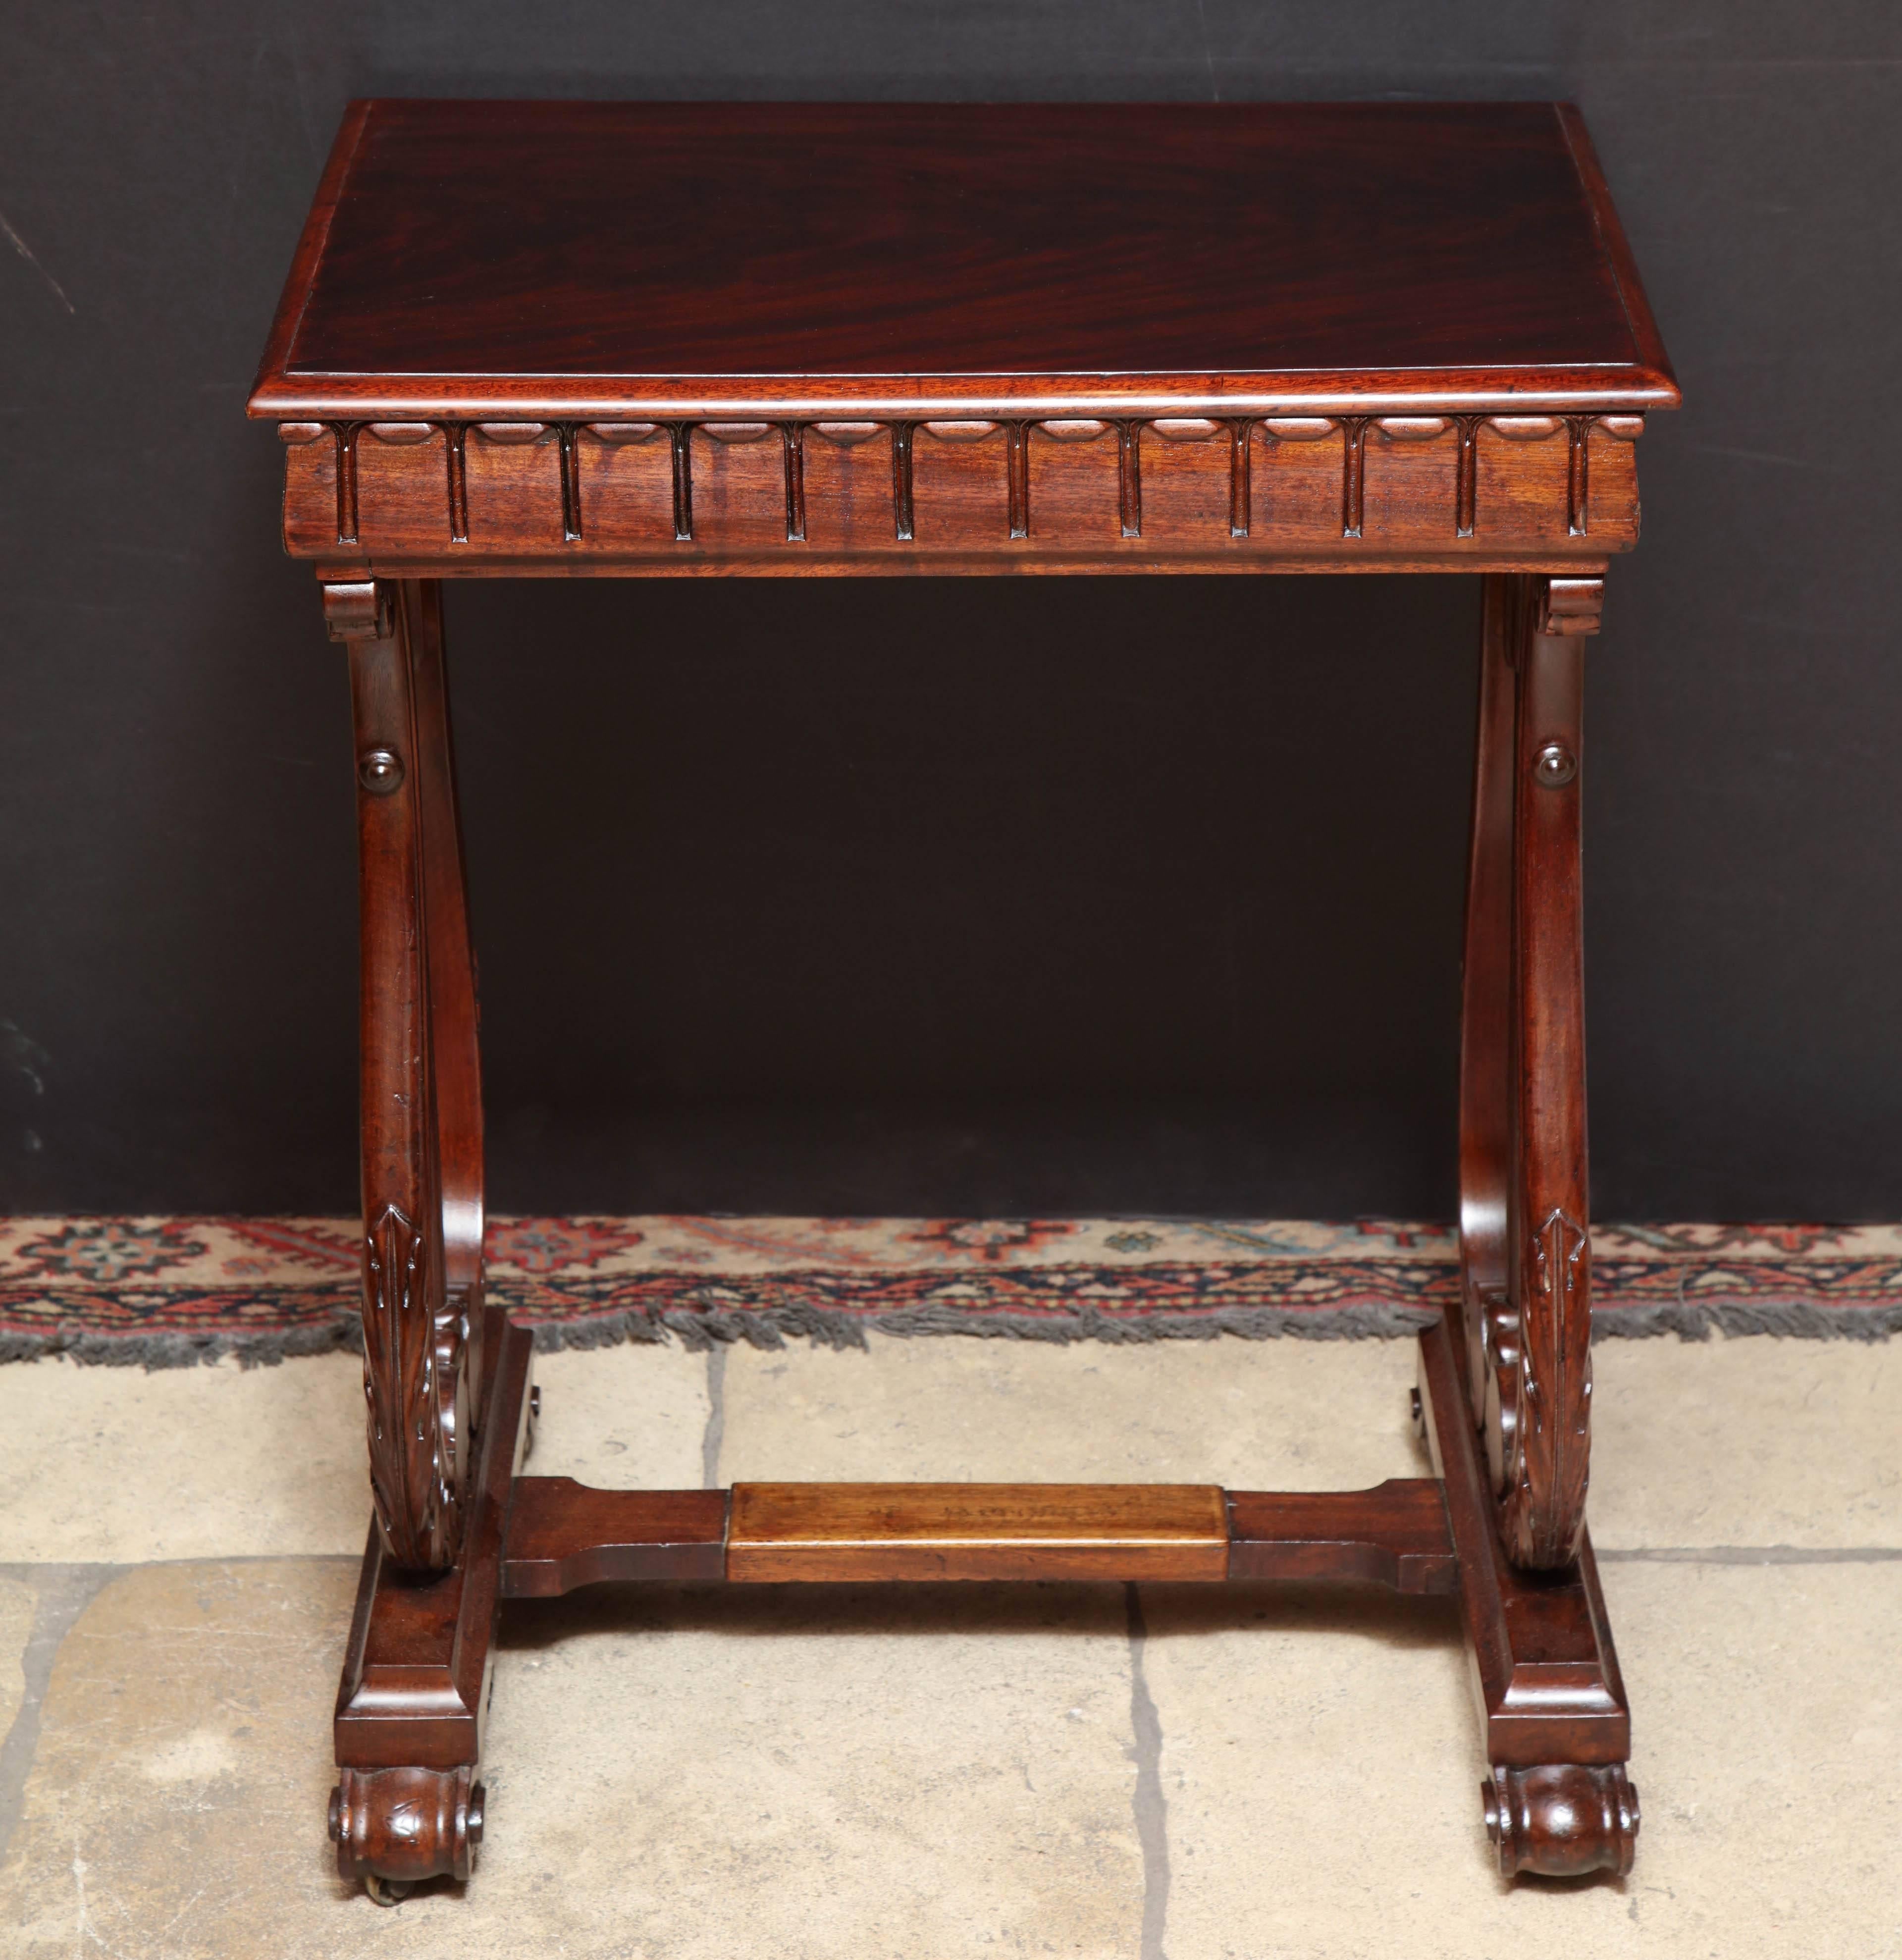 Regency rosewood one drawer side table with lyre form trestle end, lotus leaf motif sides and stretcher base. 